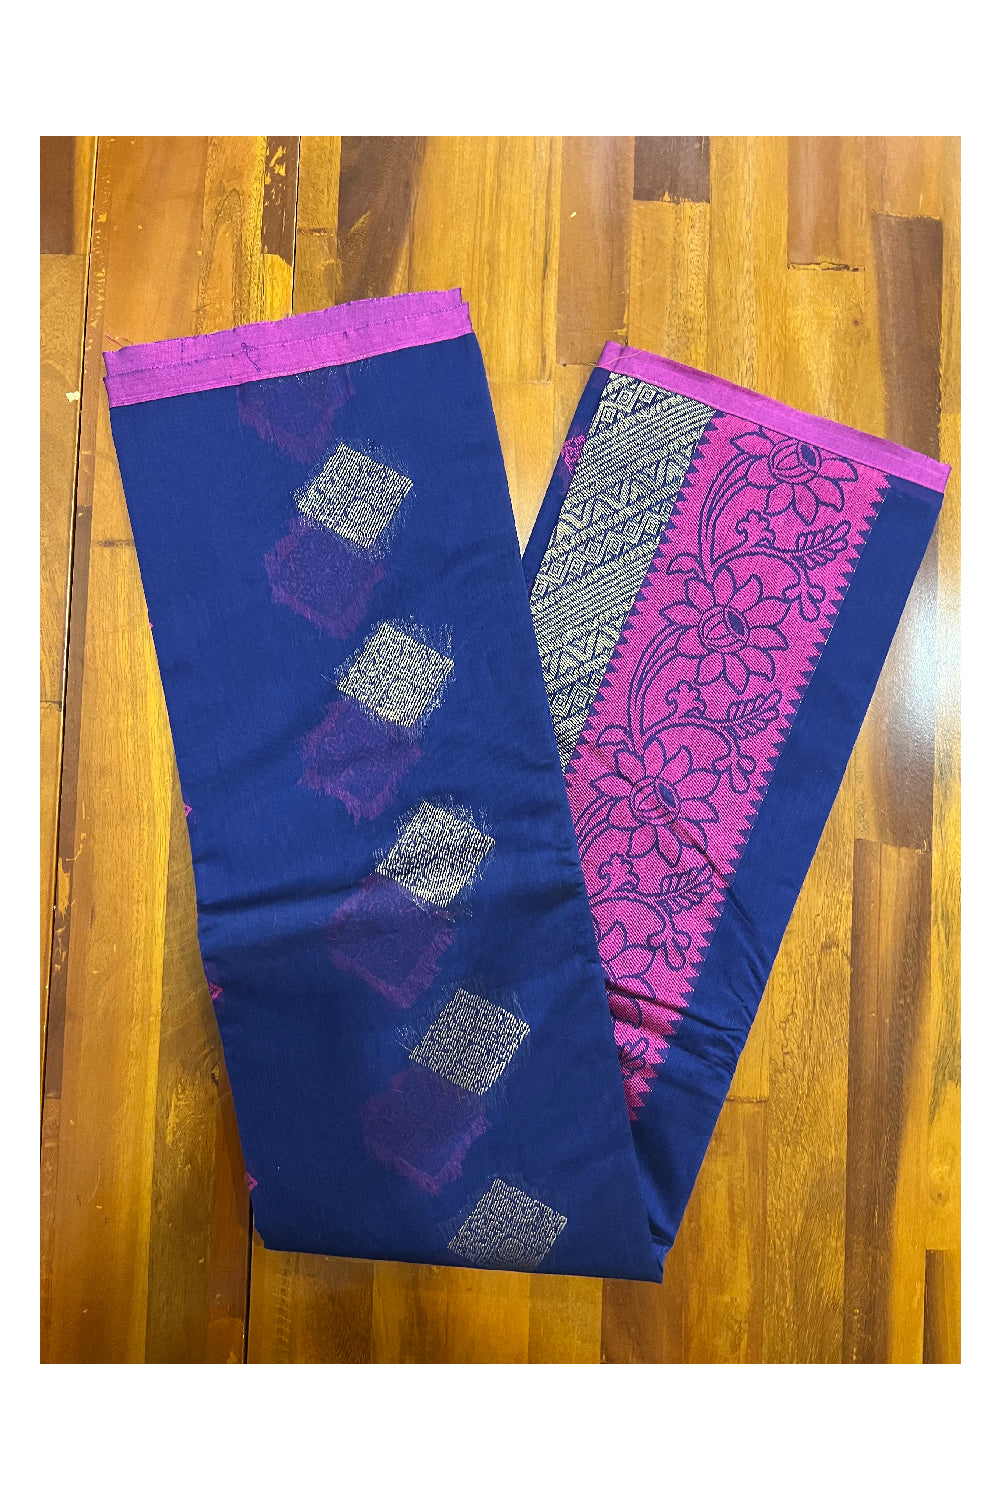 Southloom Dark Blue Cotton Designer Saree with Magenta and Zari Woven Patterns